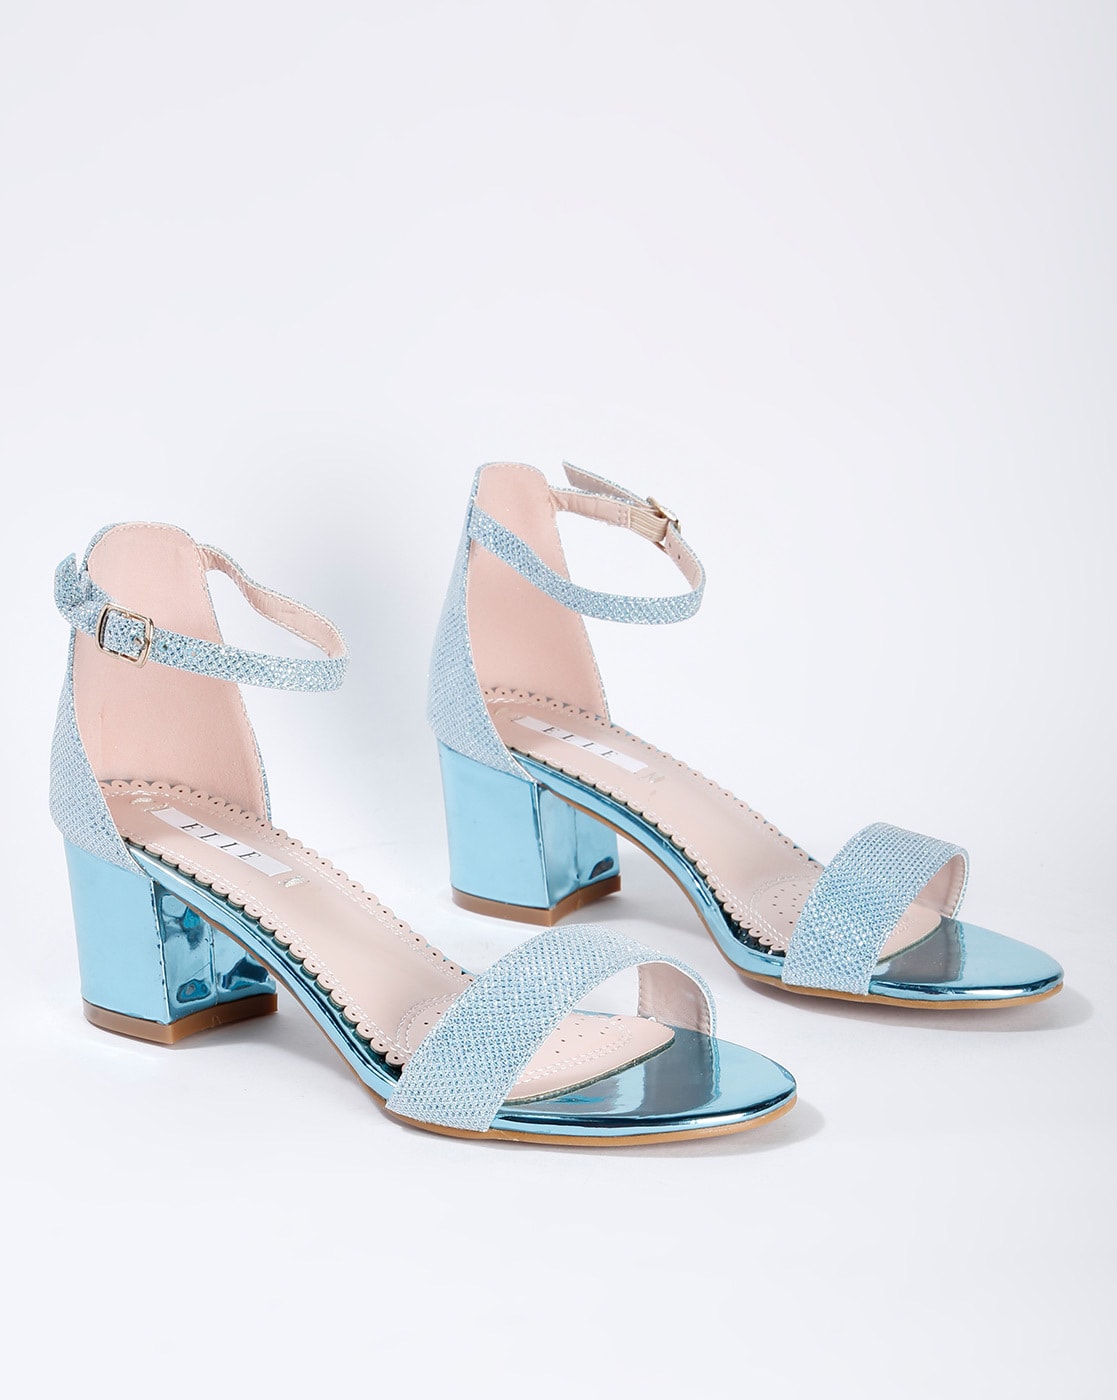 light blue block heels